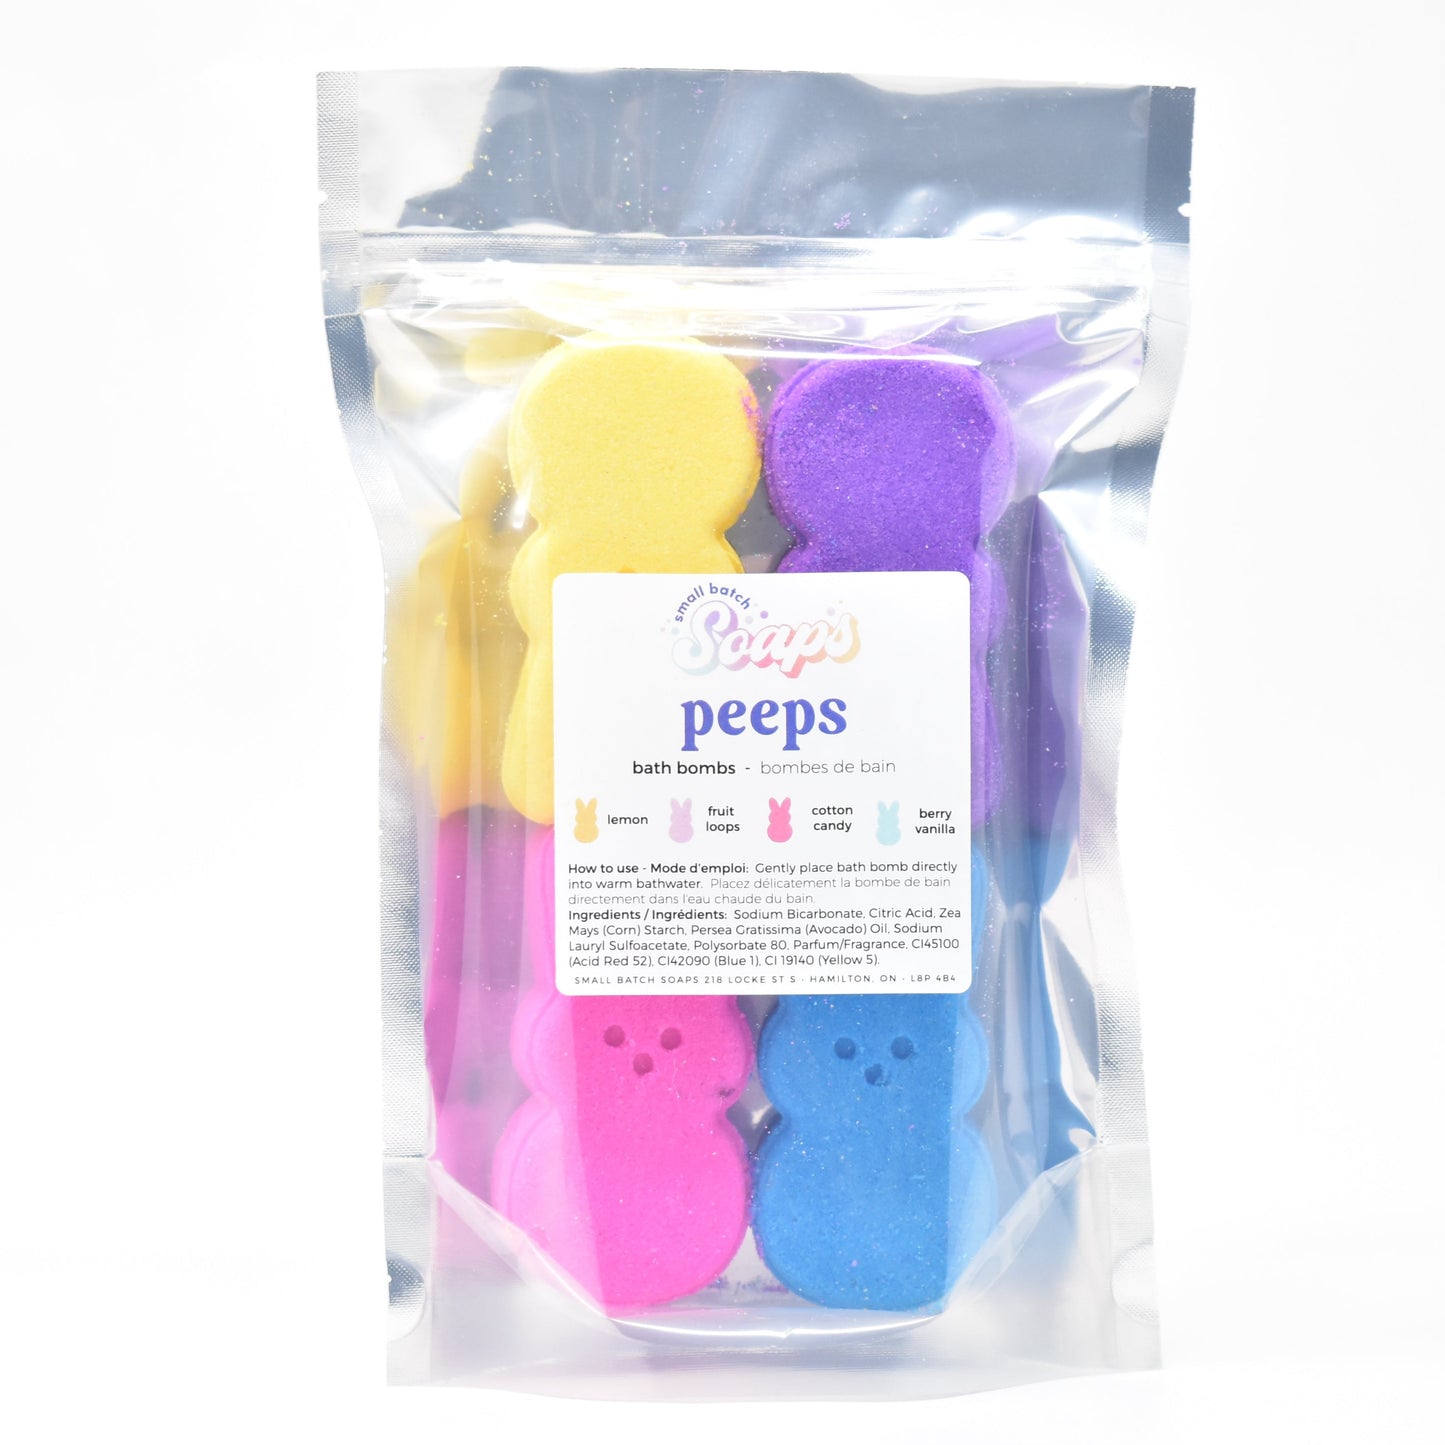 Peeps Bath Bombs (4 Pack) - Small Batch Soaps